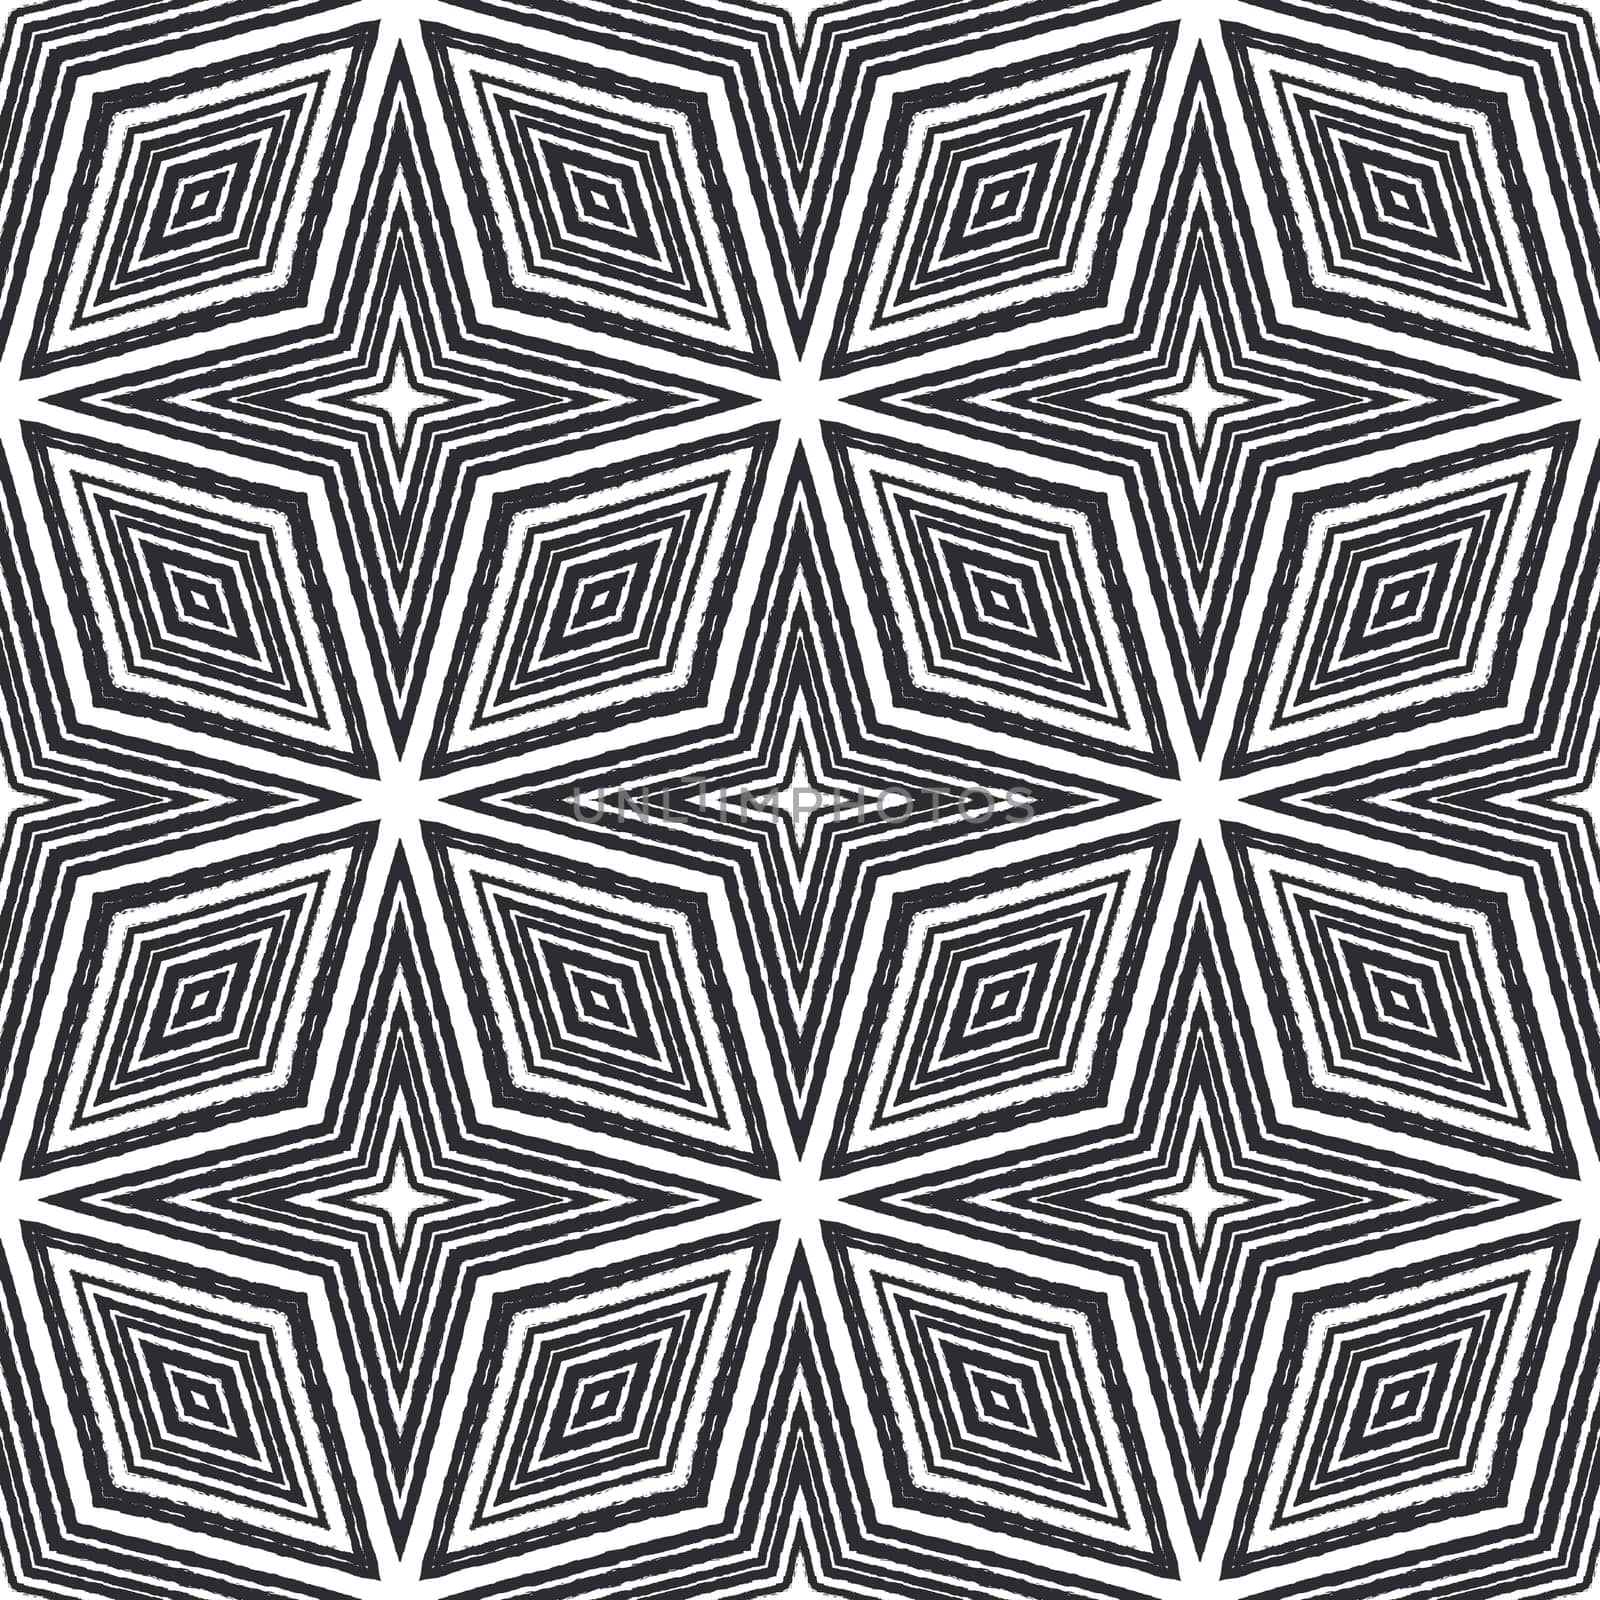 Striped hand drawn pattern. Black symmetrical by beginagain